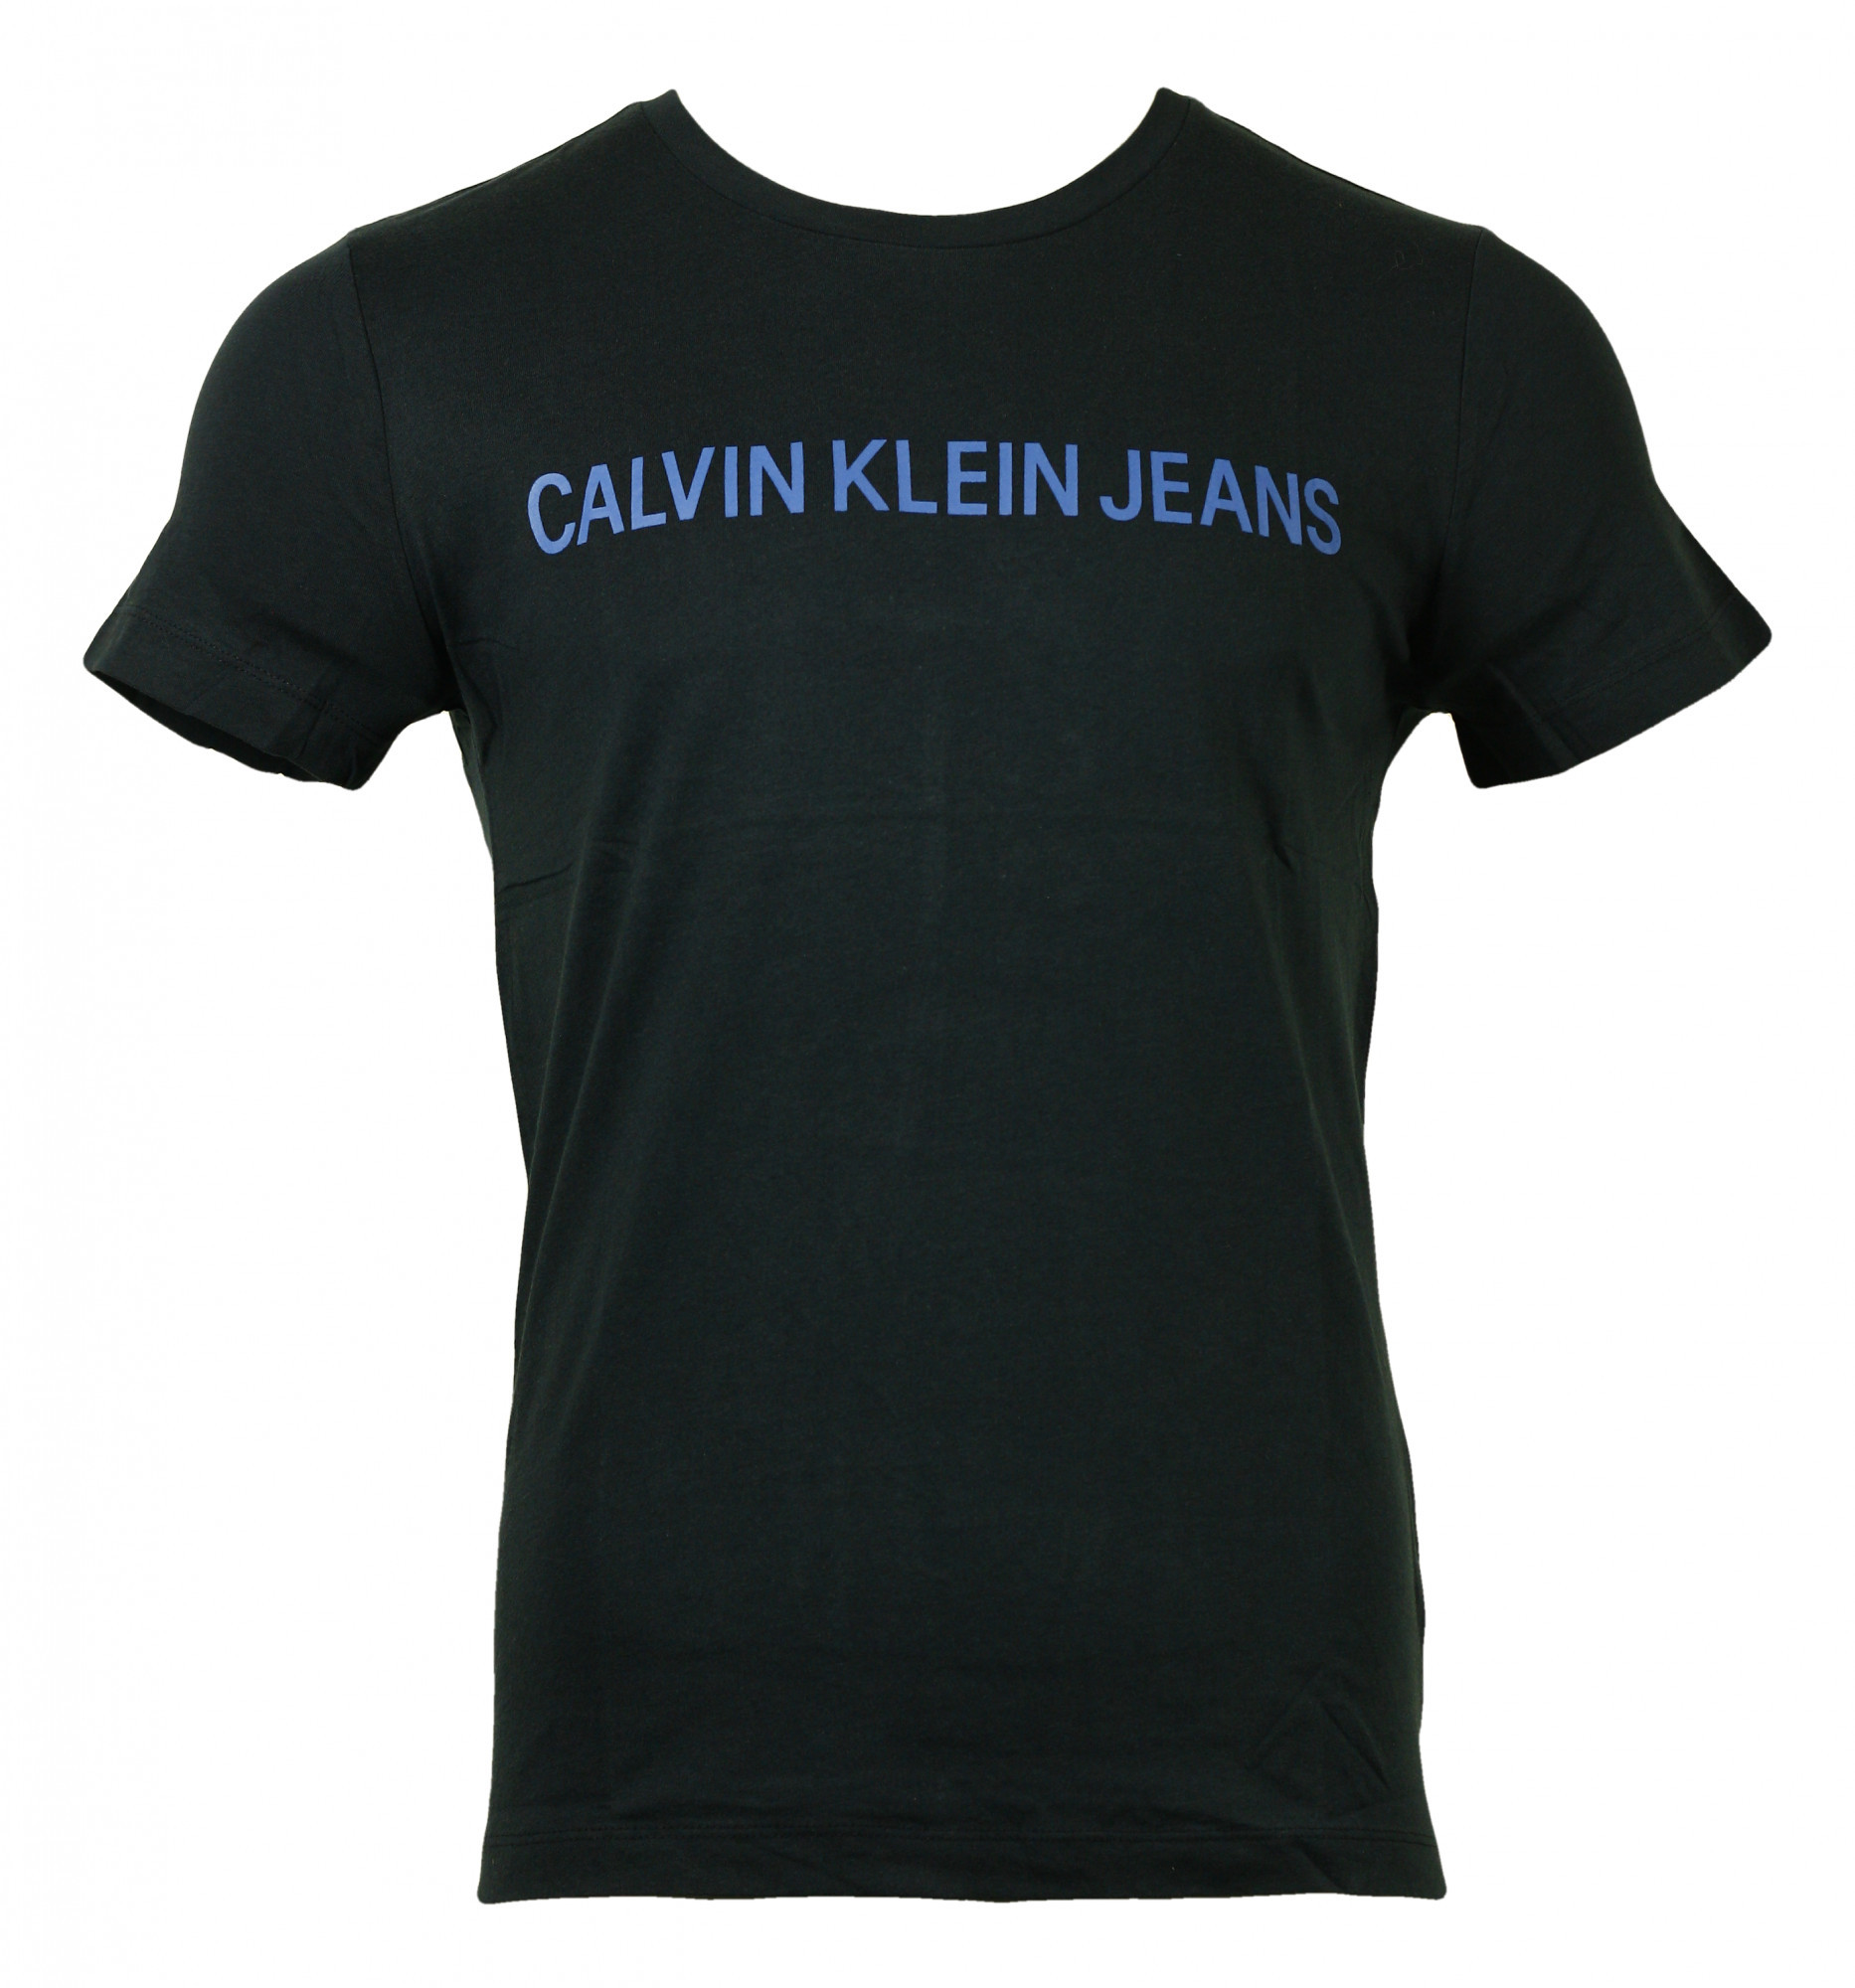 Pánské tričko OU57 tmavě modrá - Calvin Klein tmavě modrá XL